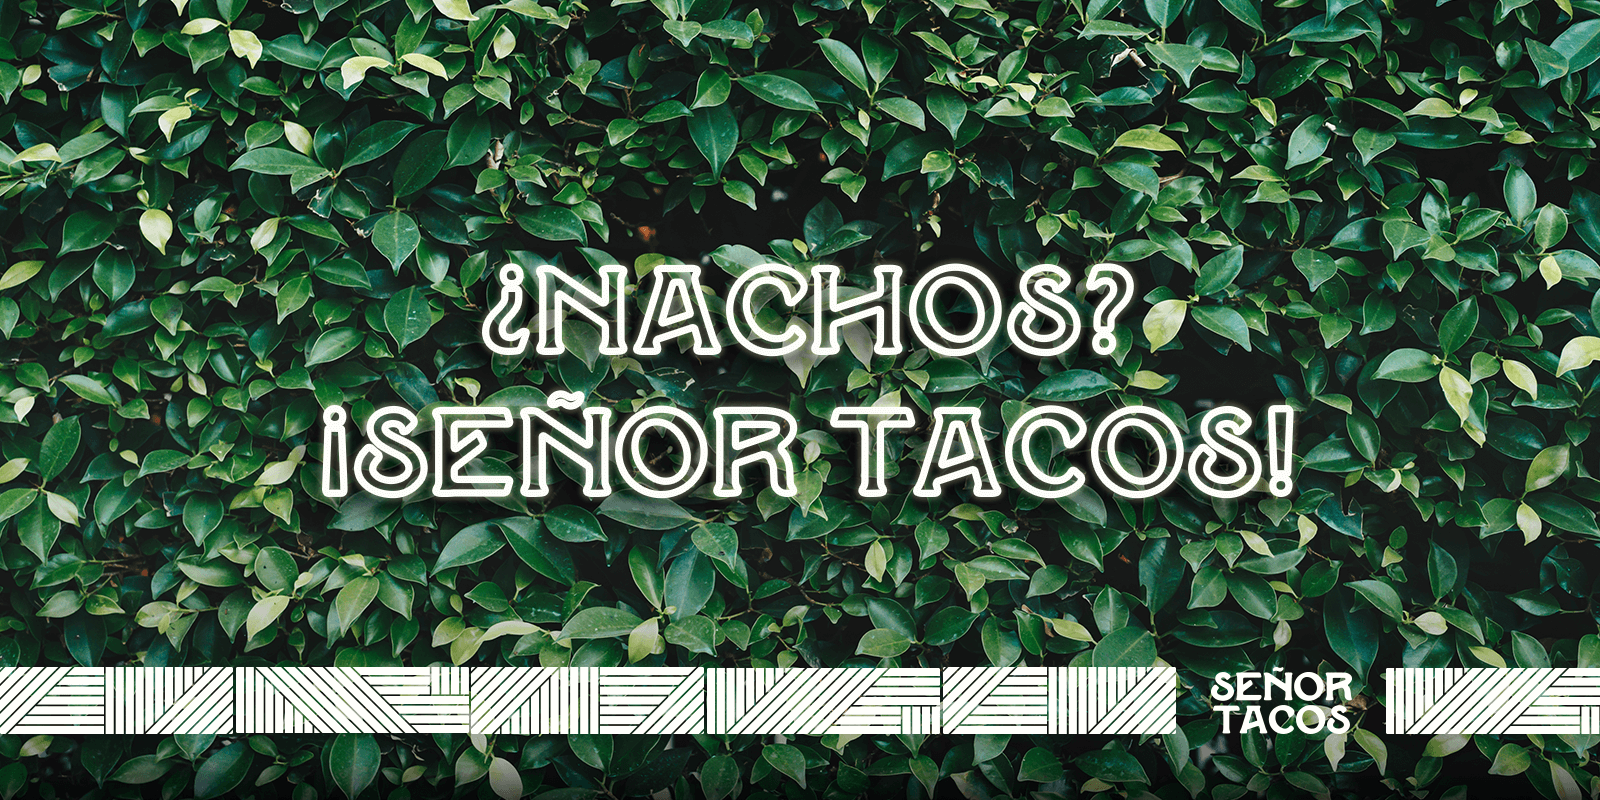 Senor Tacos Nachosi